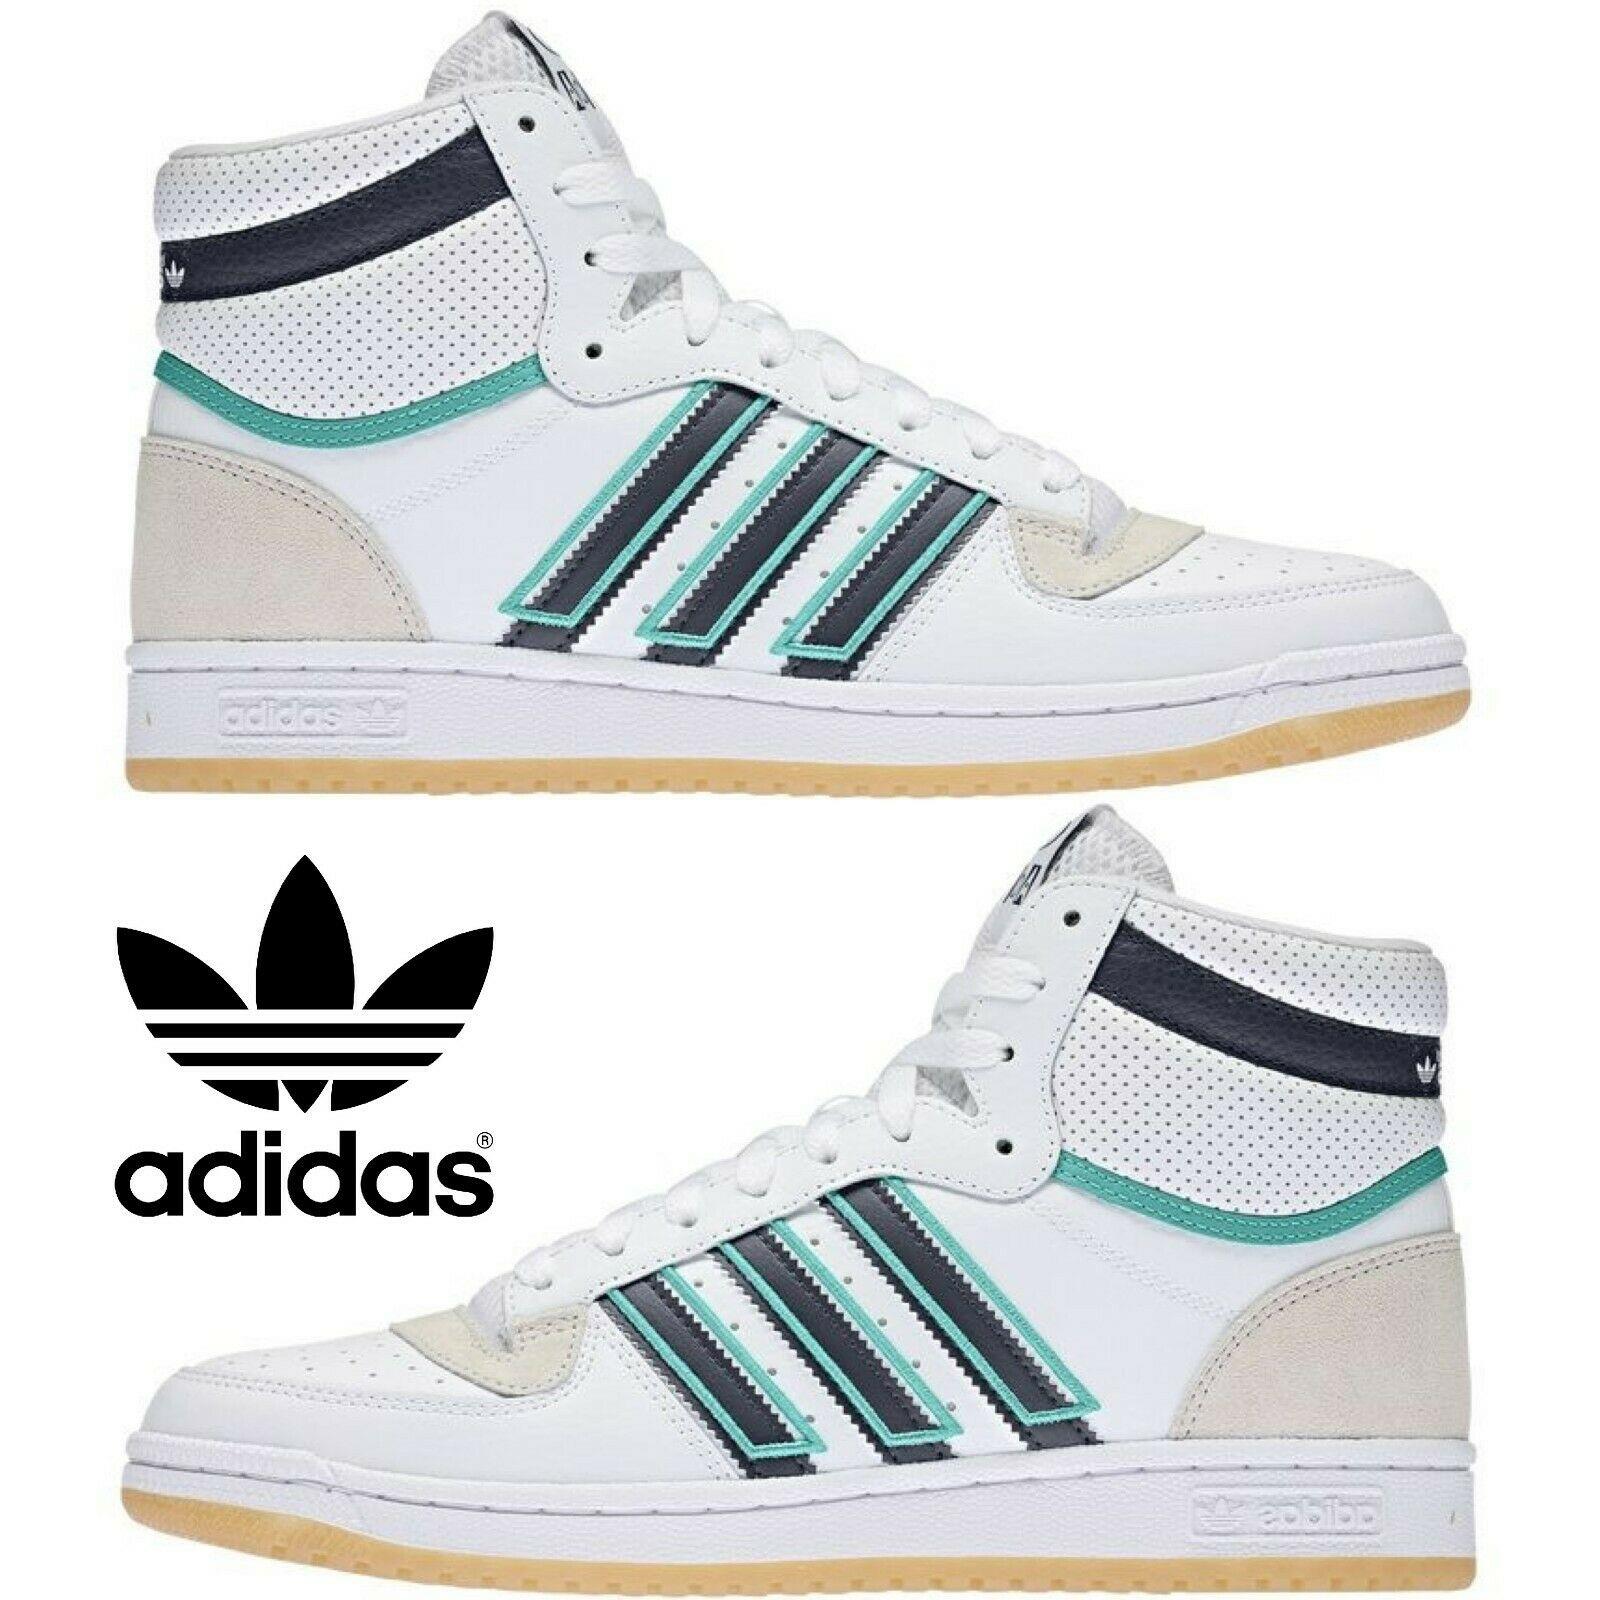 Adidas Originals Top Ten Hi Men`s Sneakers Comfort Casual Shoes White Navy Mint - White , White/Navy/Mint Manufacturer